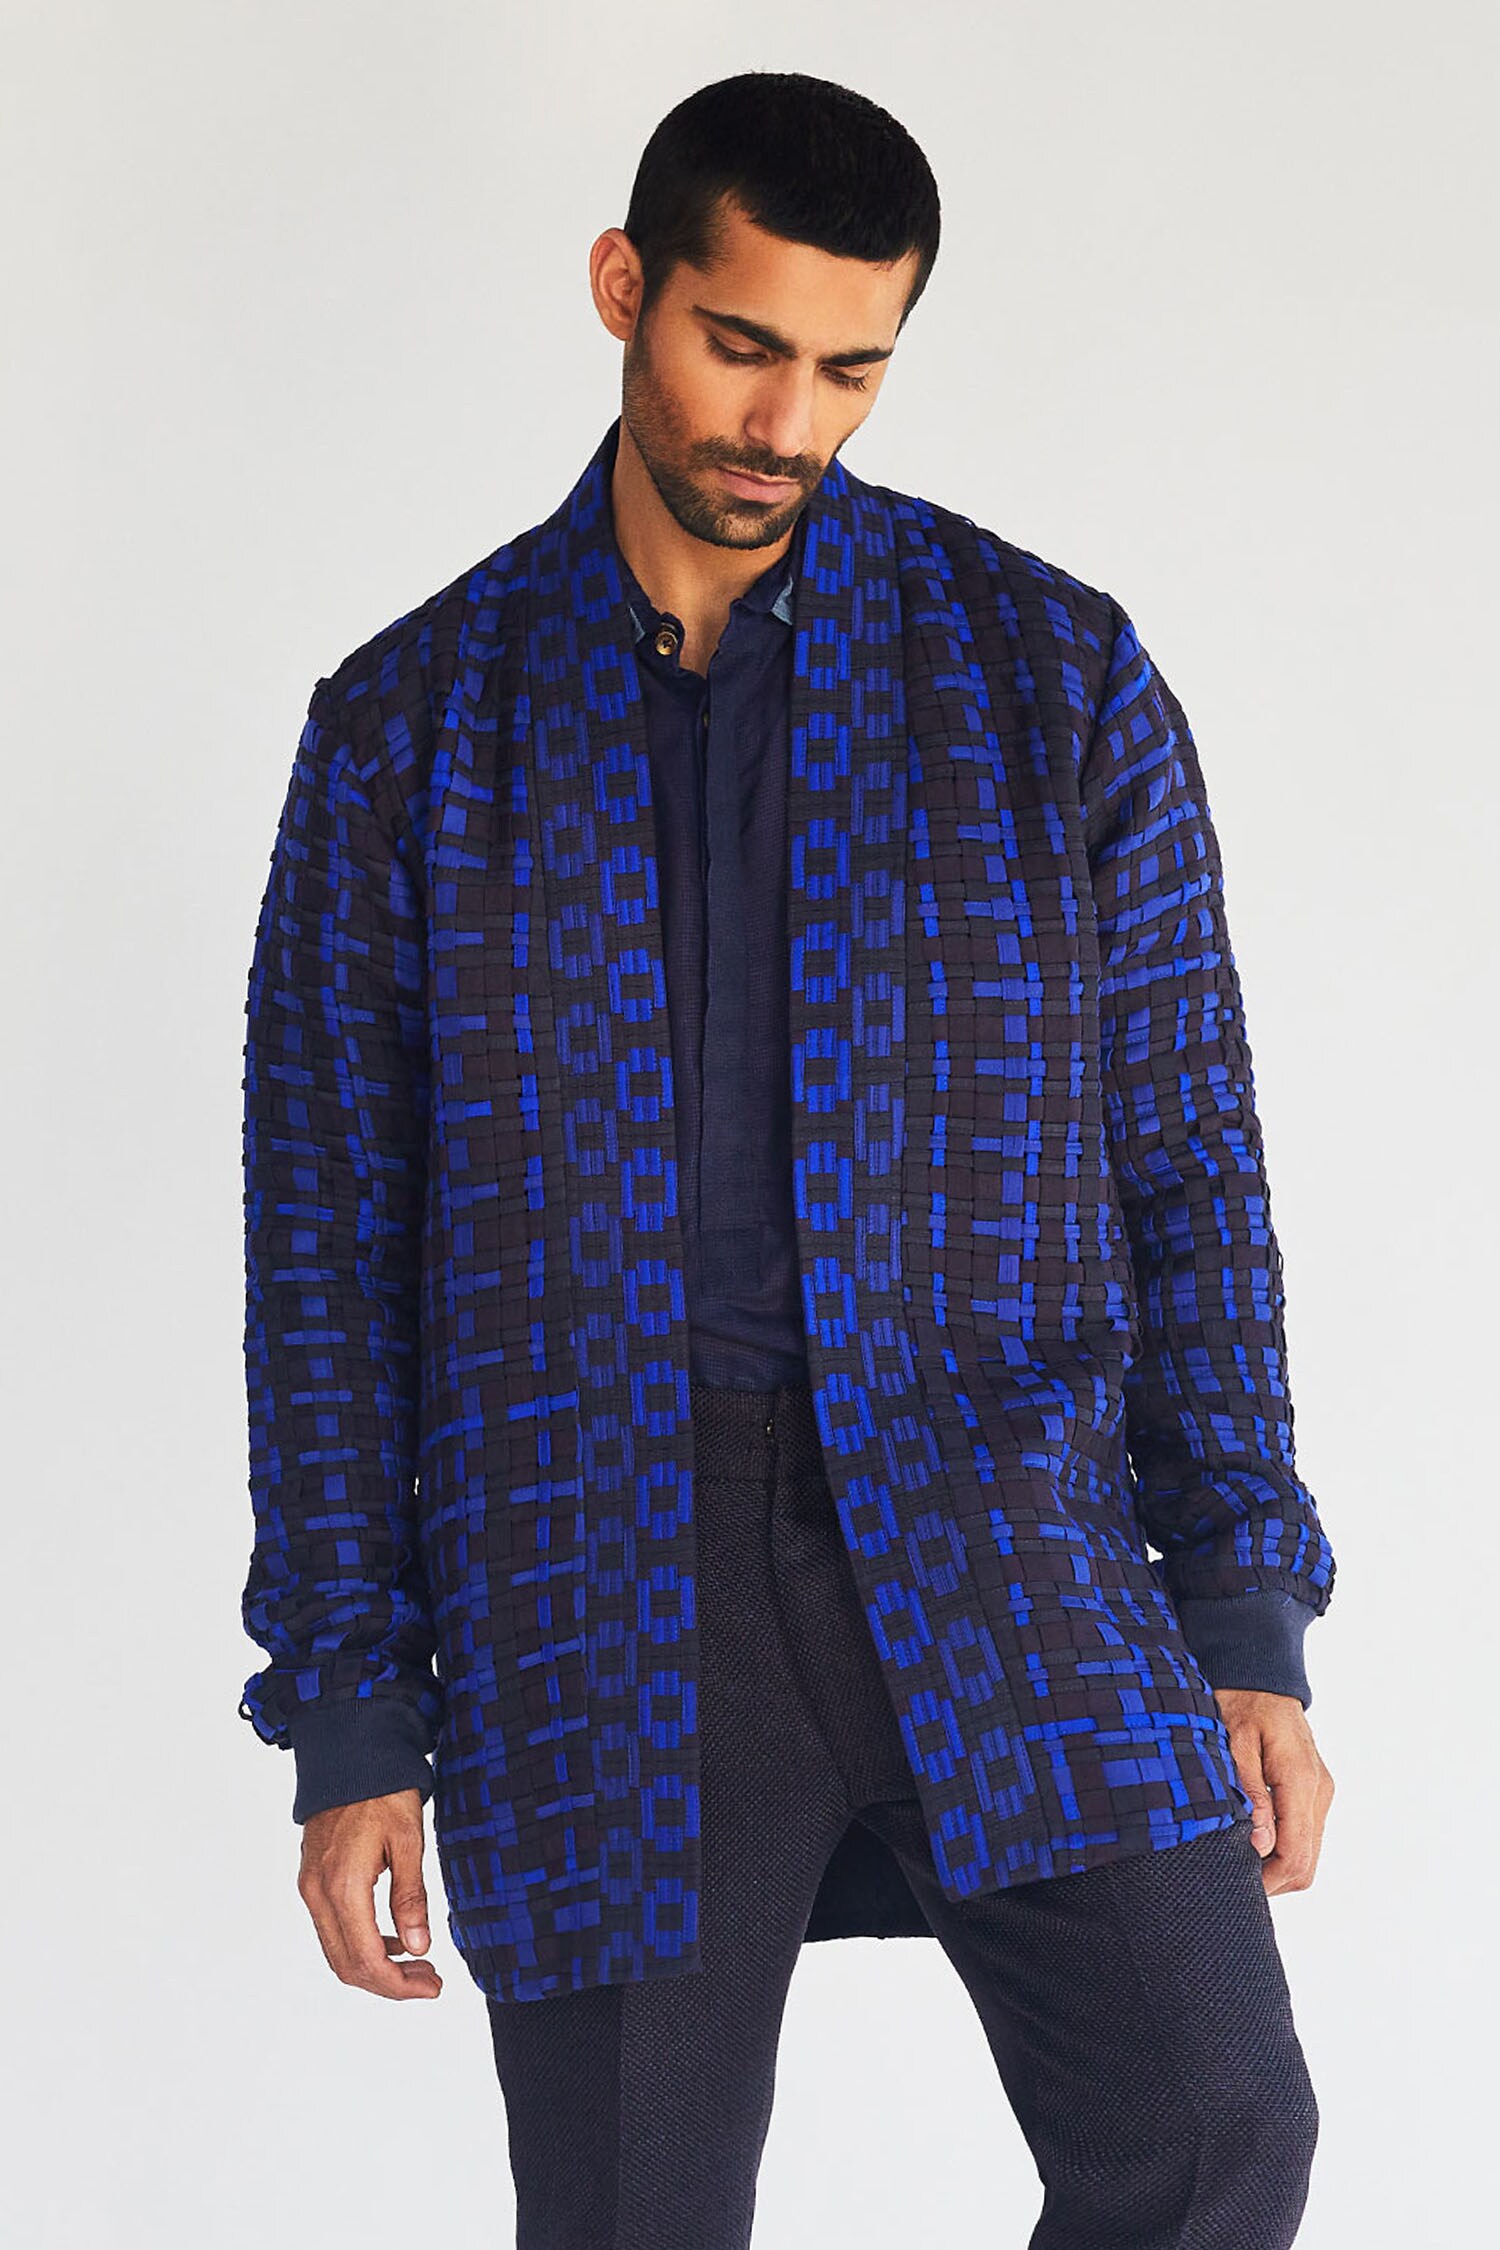 Kunal Anil Tanna Blue Cotton Jacket And Pant Set